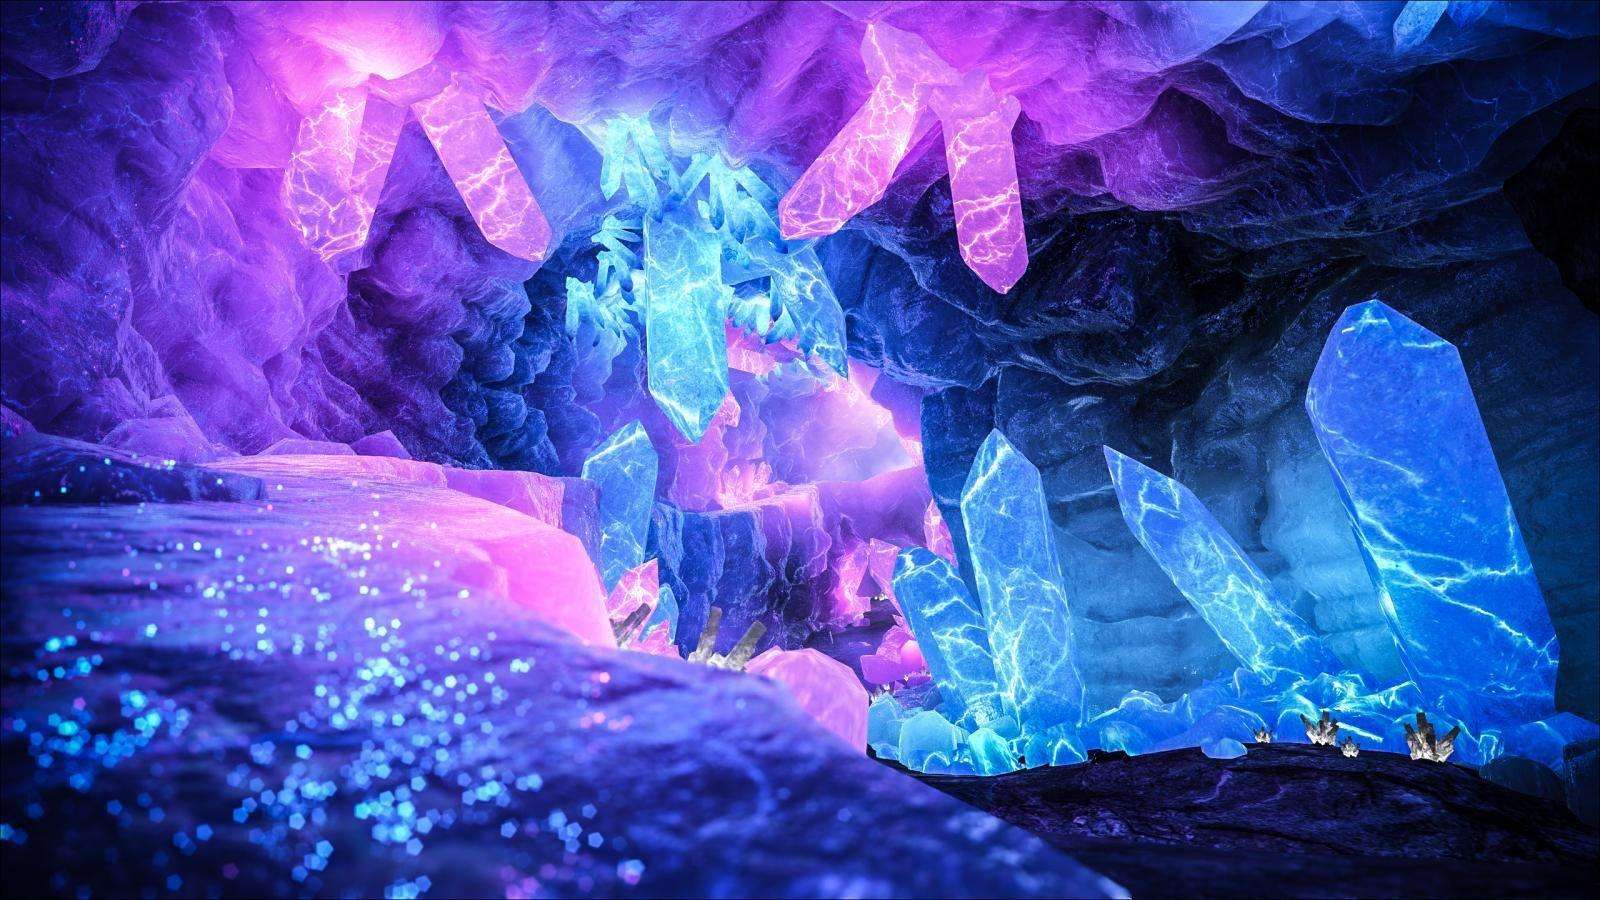 Caverna de Cristal Neon puzzle online a partir de fotografia